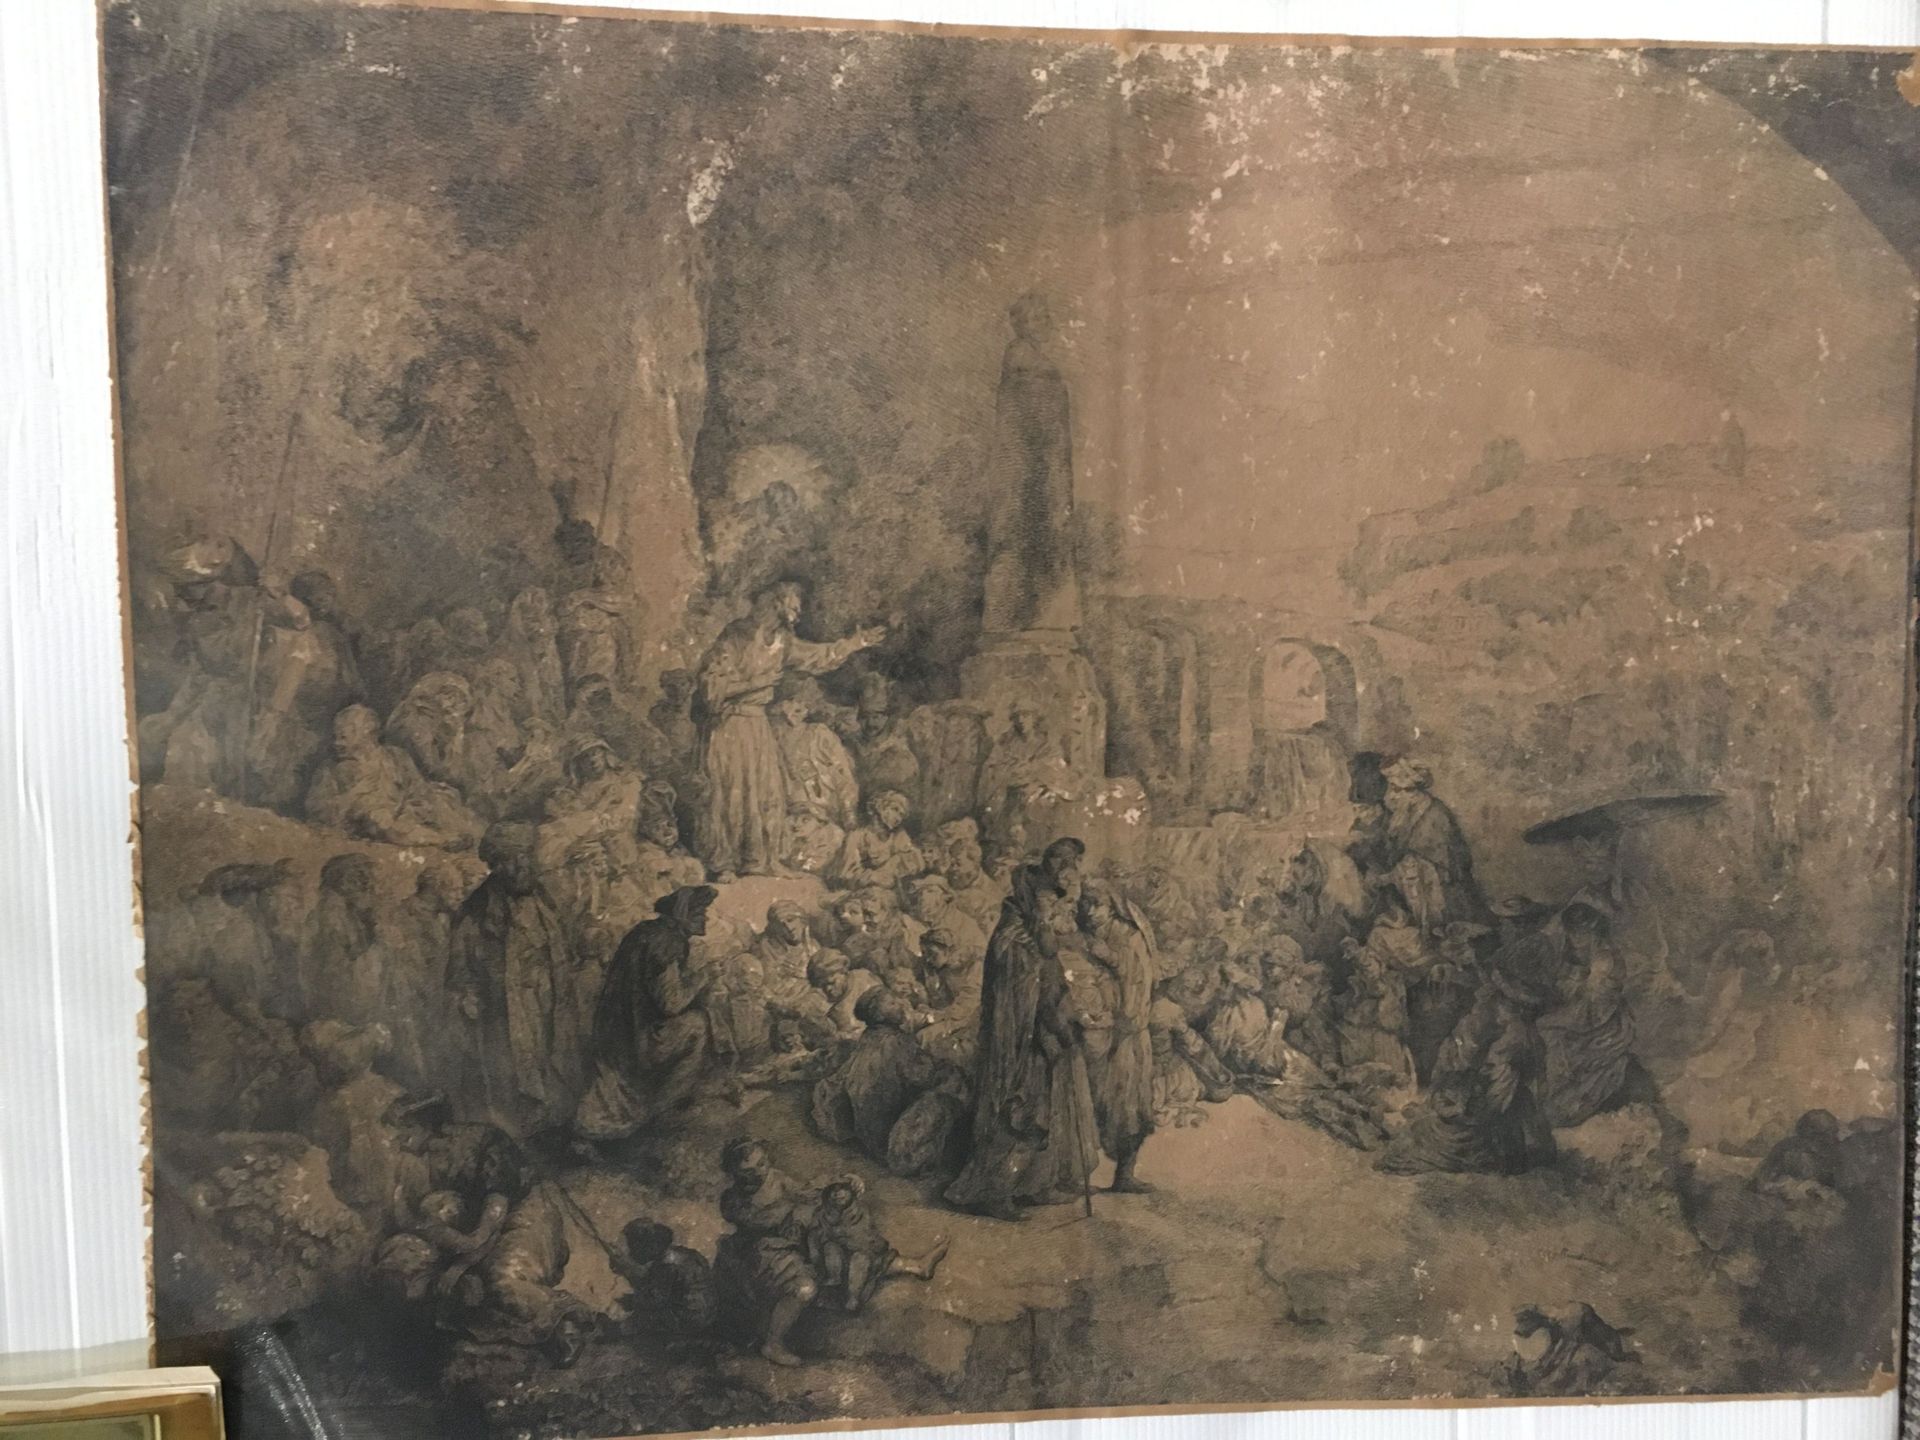 Null 让-皮埃尔-诺布林-德拉古尔丹(1745-1830)
施洗者圣约翰的传教，在伦勃朗之后。 
蚀刻版画，是根据主题切割的精美样张，衬托出许多表面的去除和&hellip;